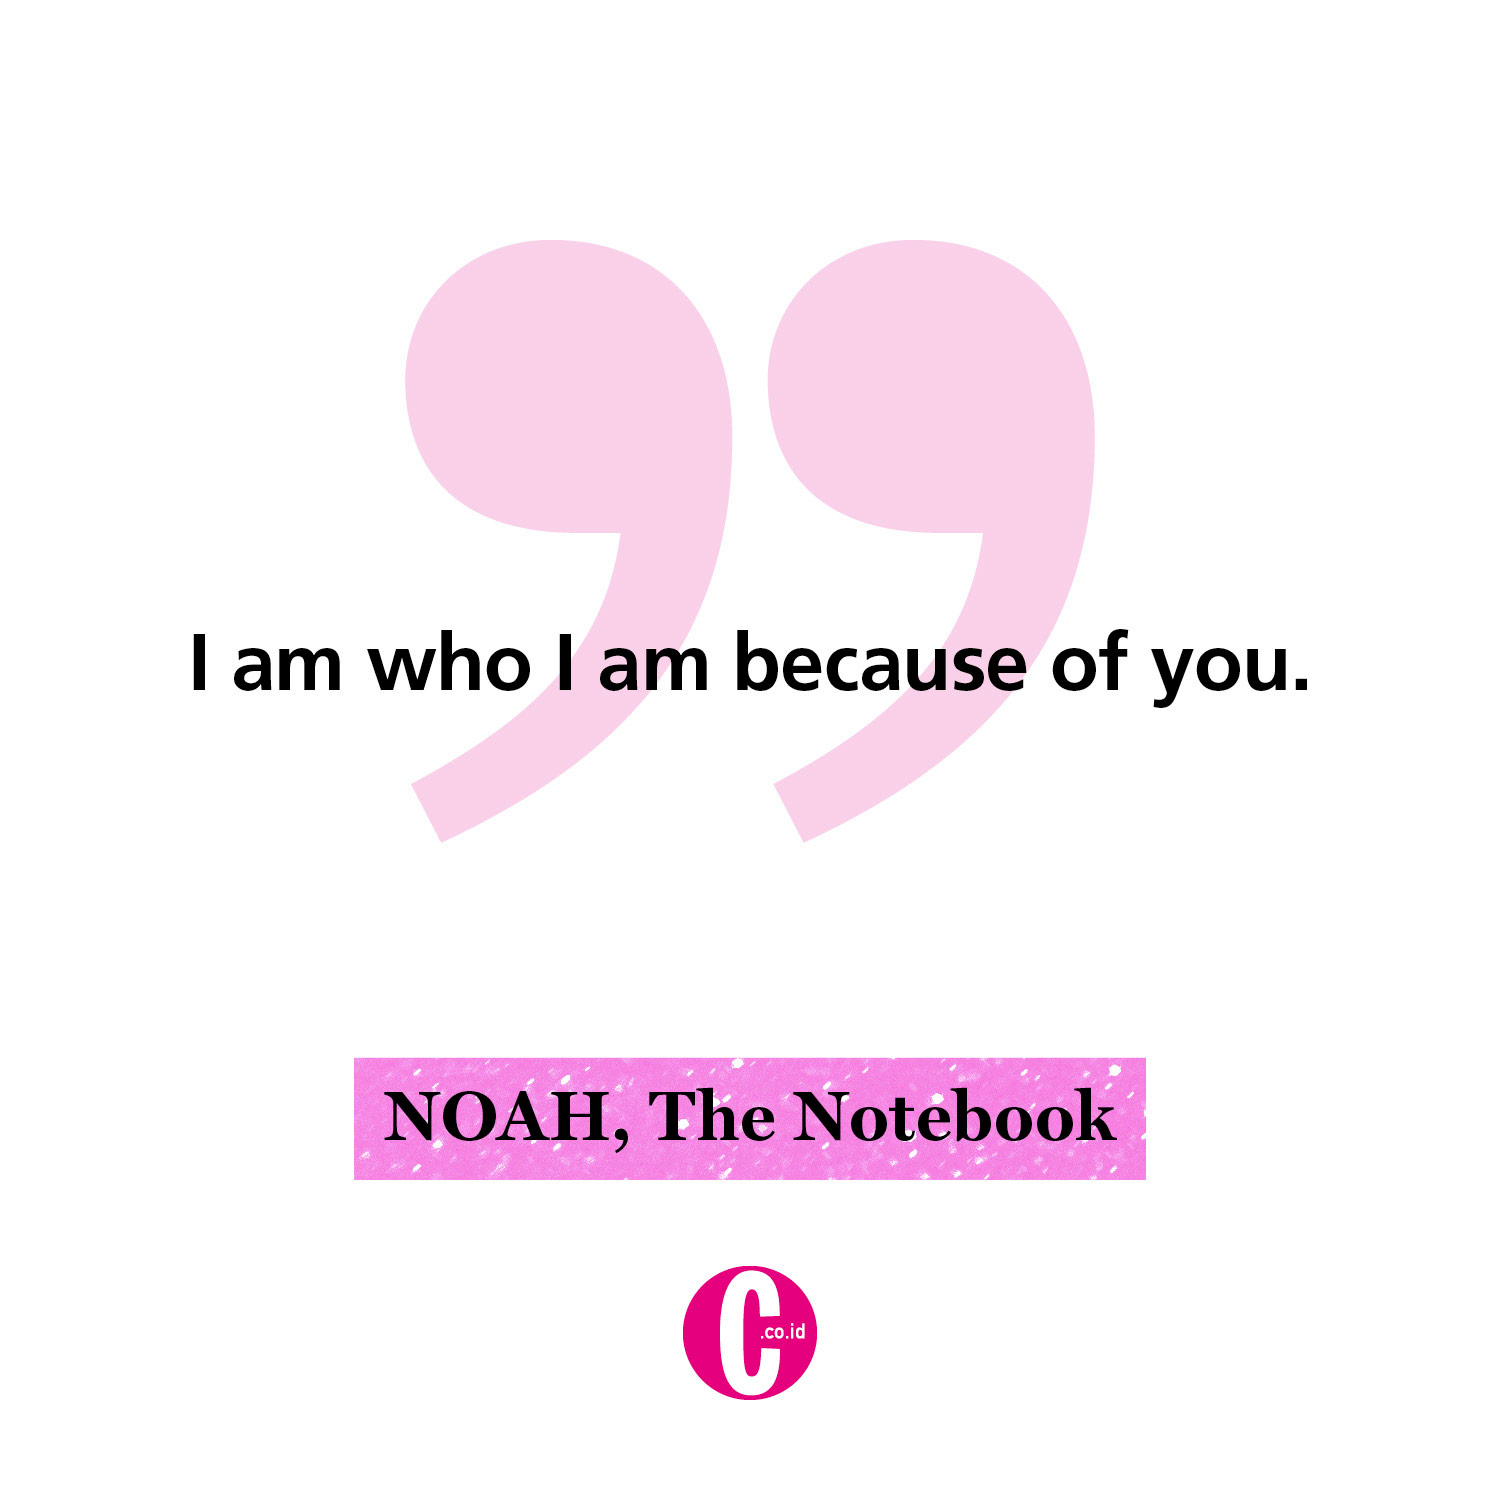 Kata-kata romantis dari Noah, The Notebook